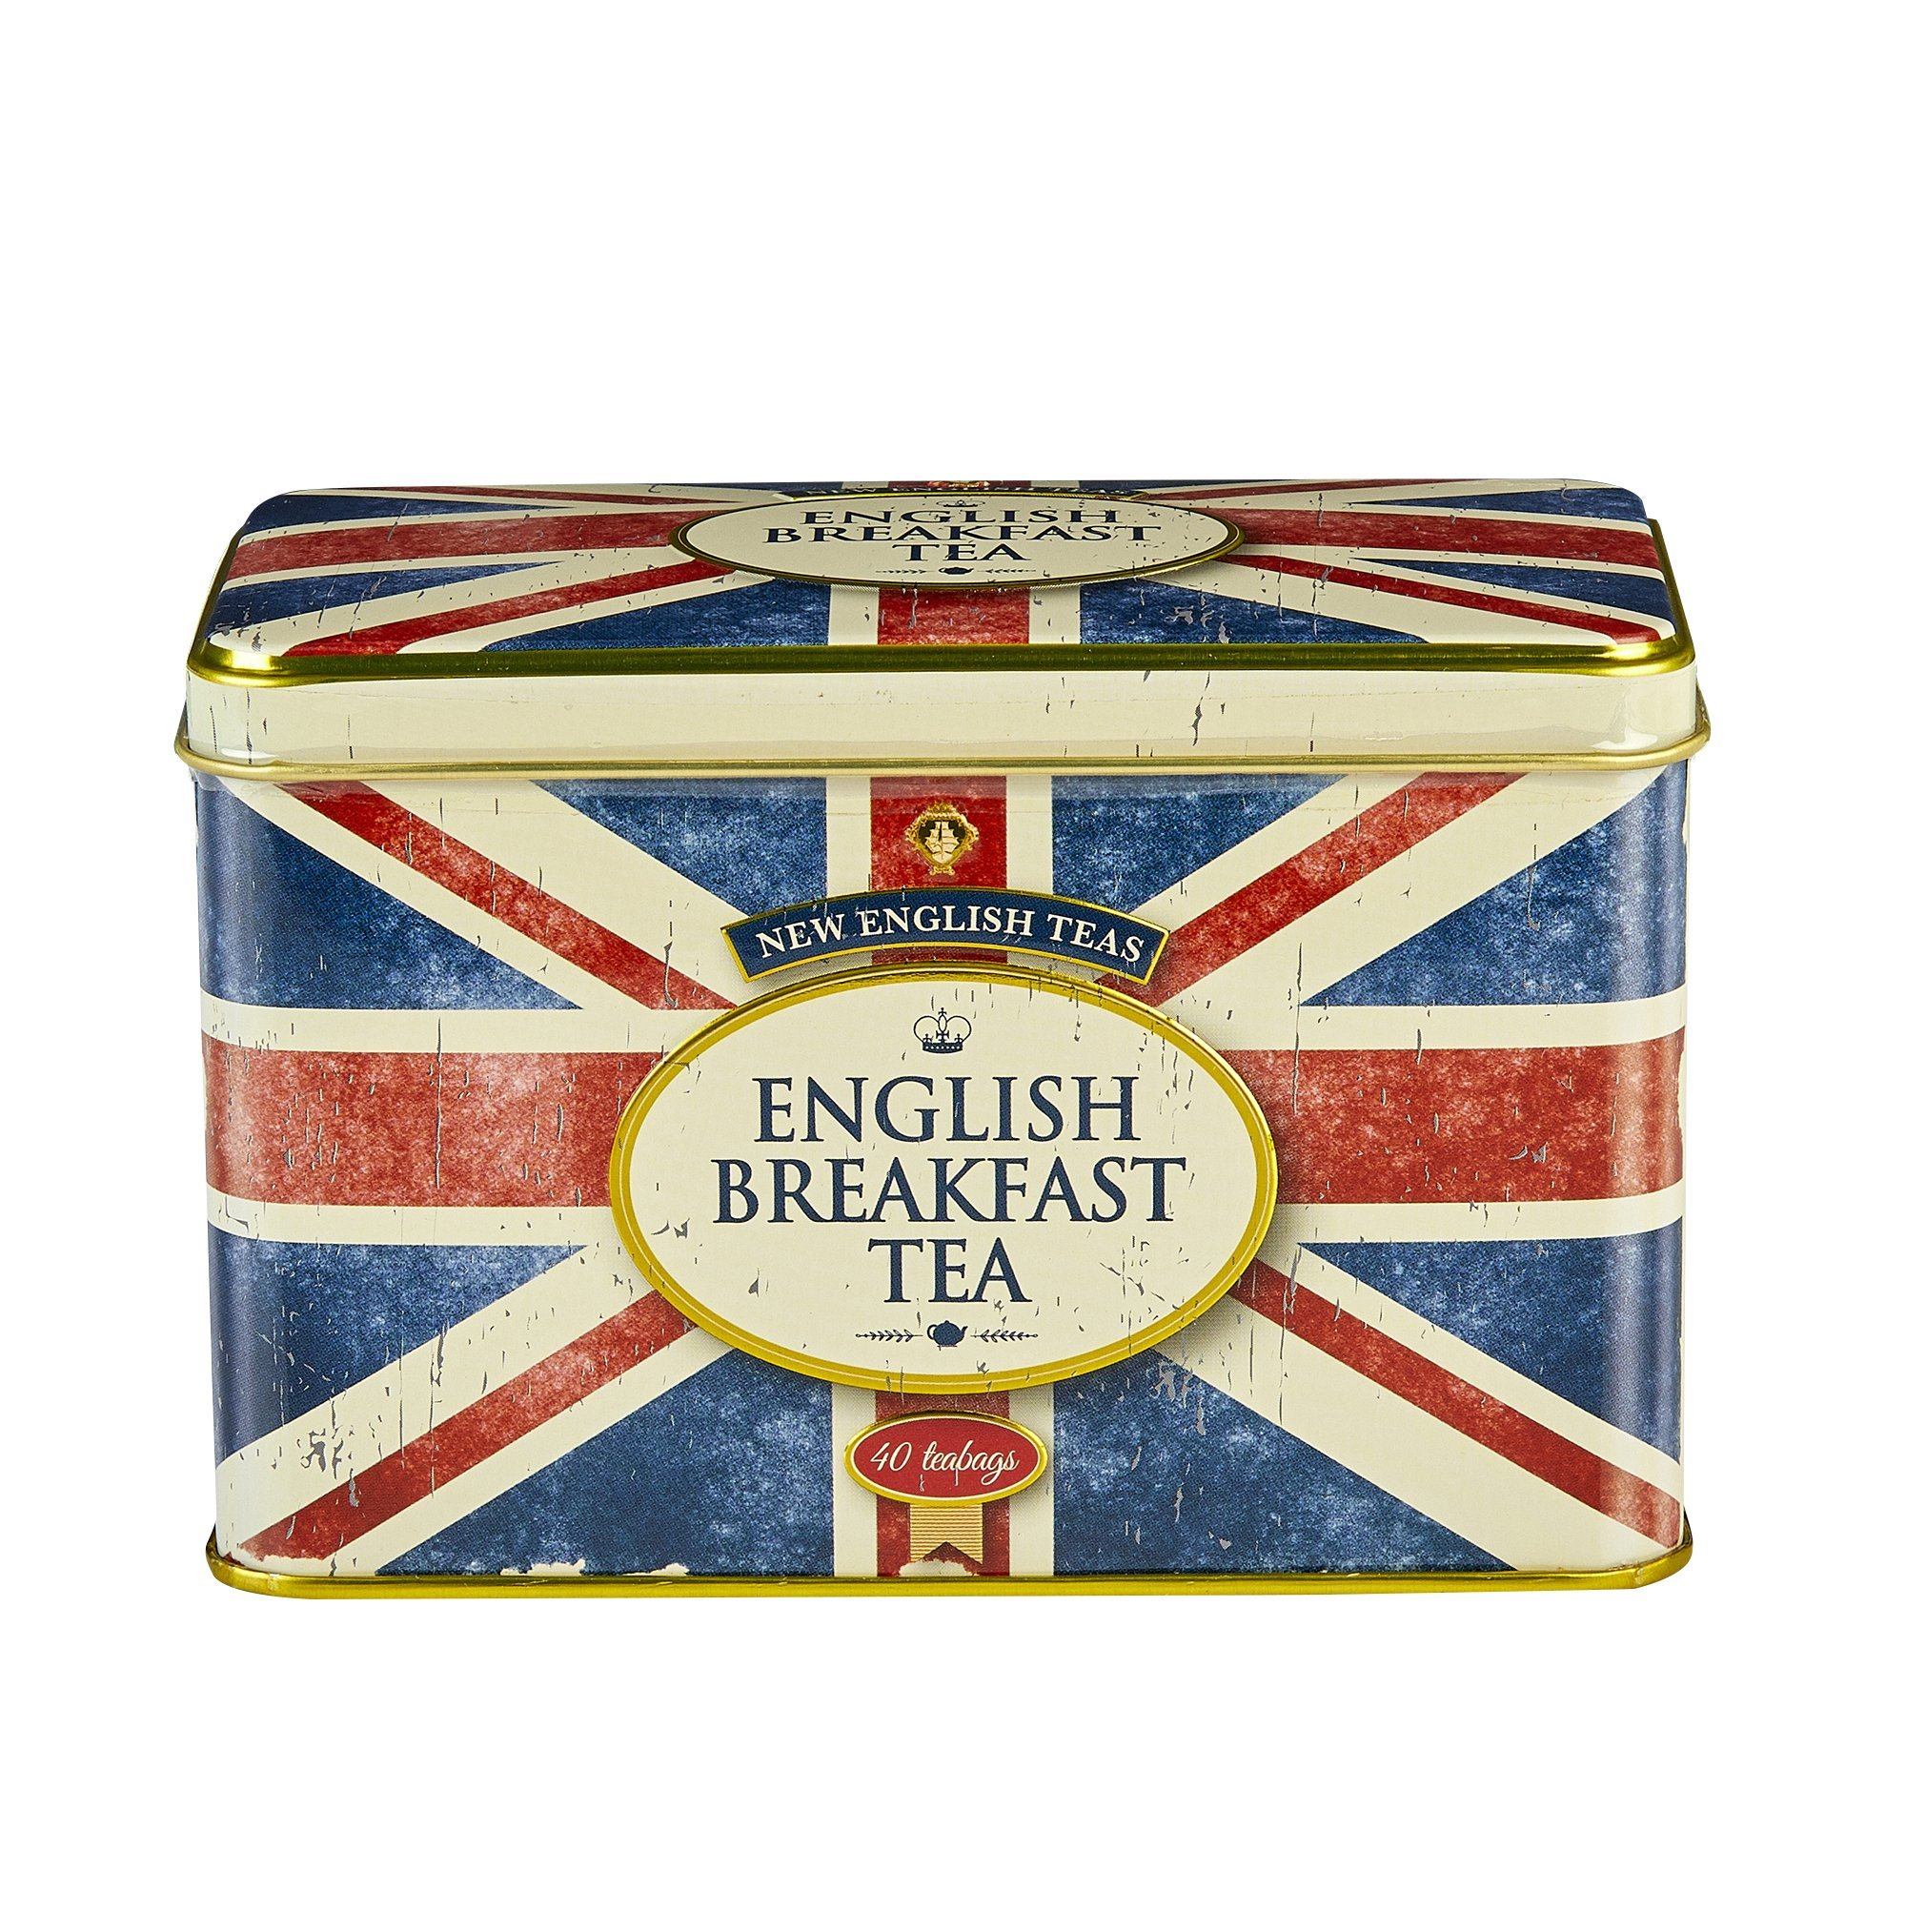 Retro Union Jack English Breakfast Tea Tin 40 Teabags Black Tea New English Teas 